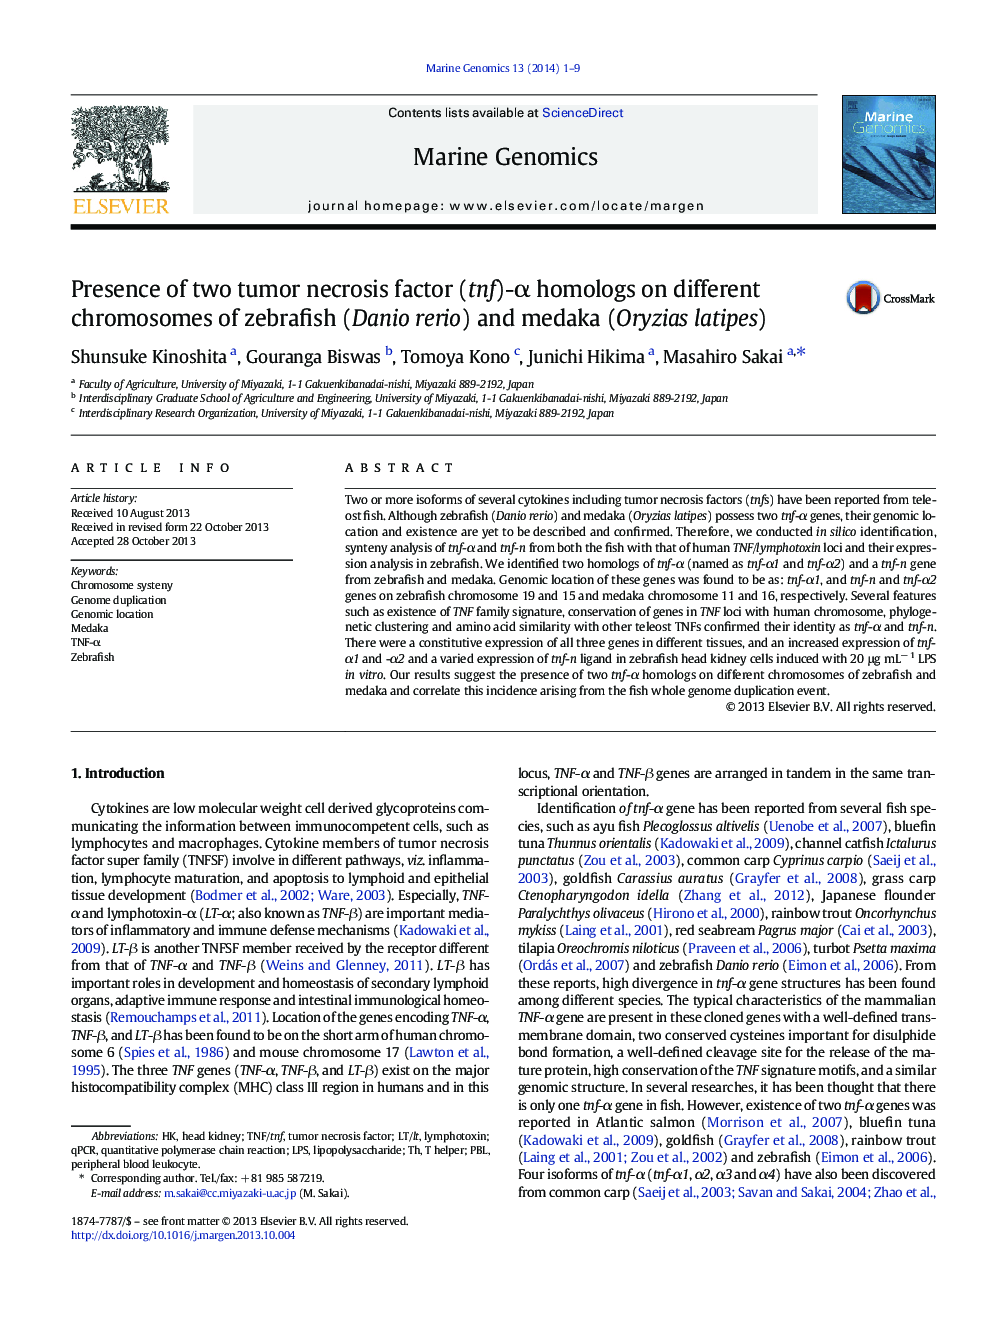 Presence of two tumor necrosis factor (tnf)-α homologs on different chromosomes of zebrafish (Danio rerio) and medaka (Oryzias latipes)